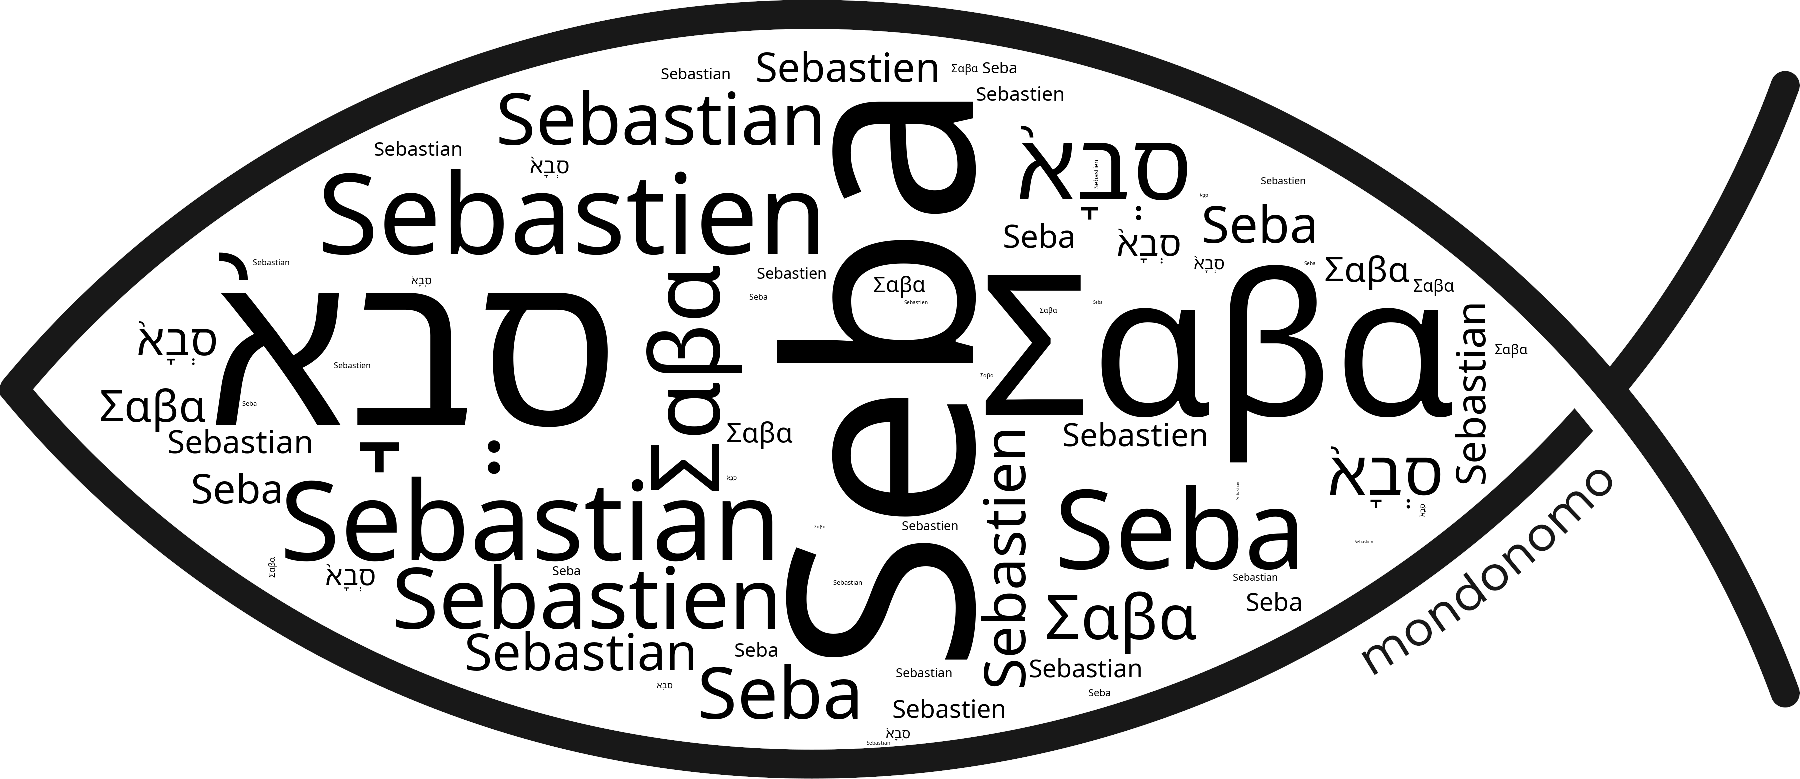 Name Seba in the world's Bibles